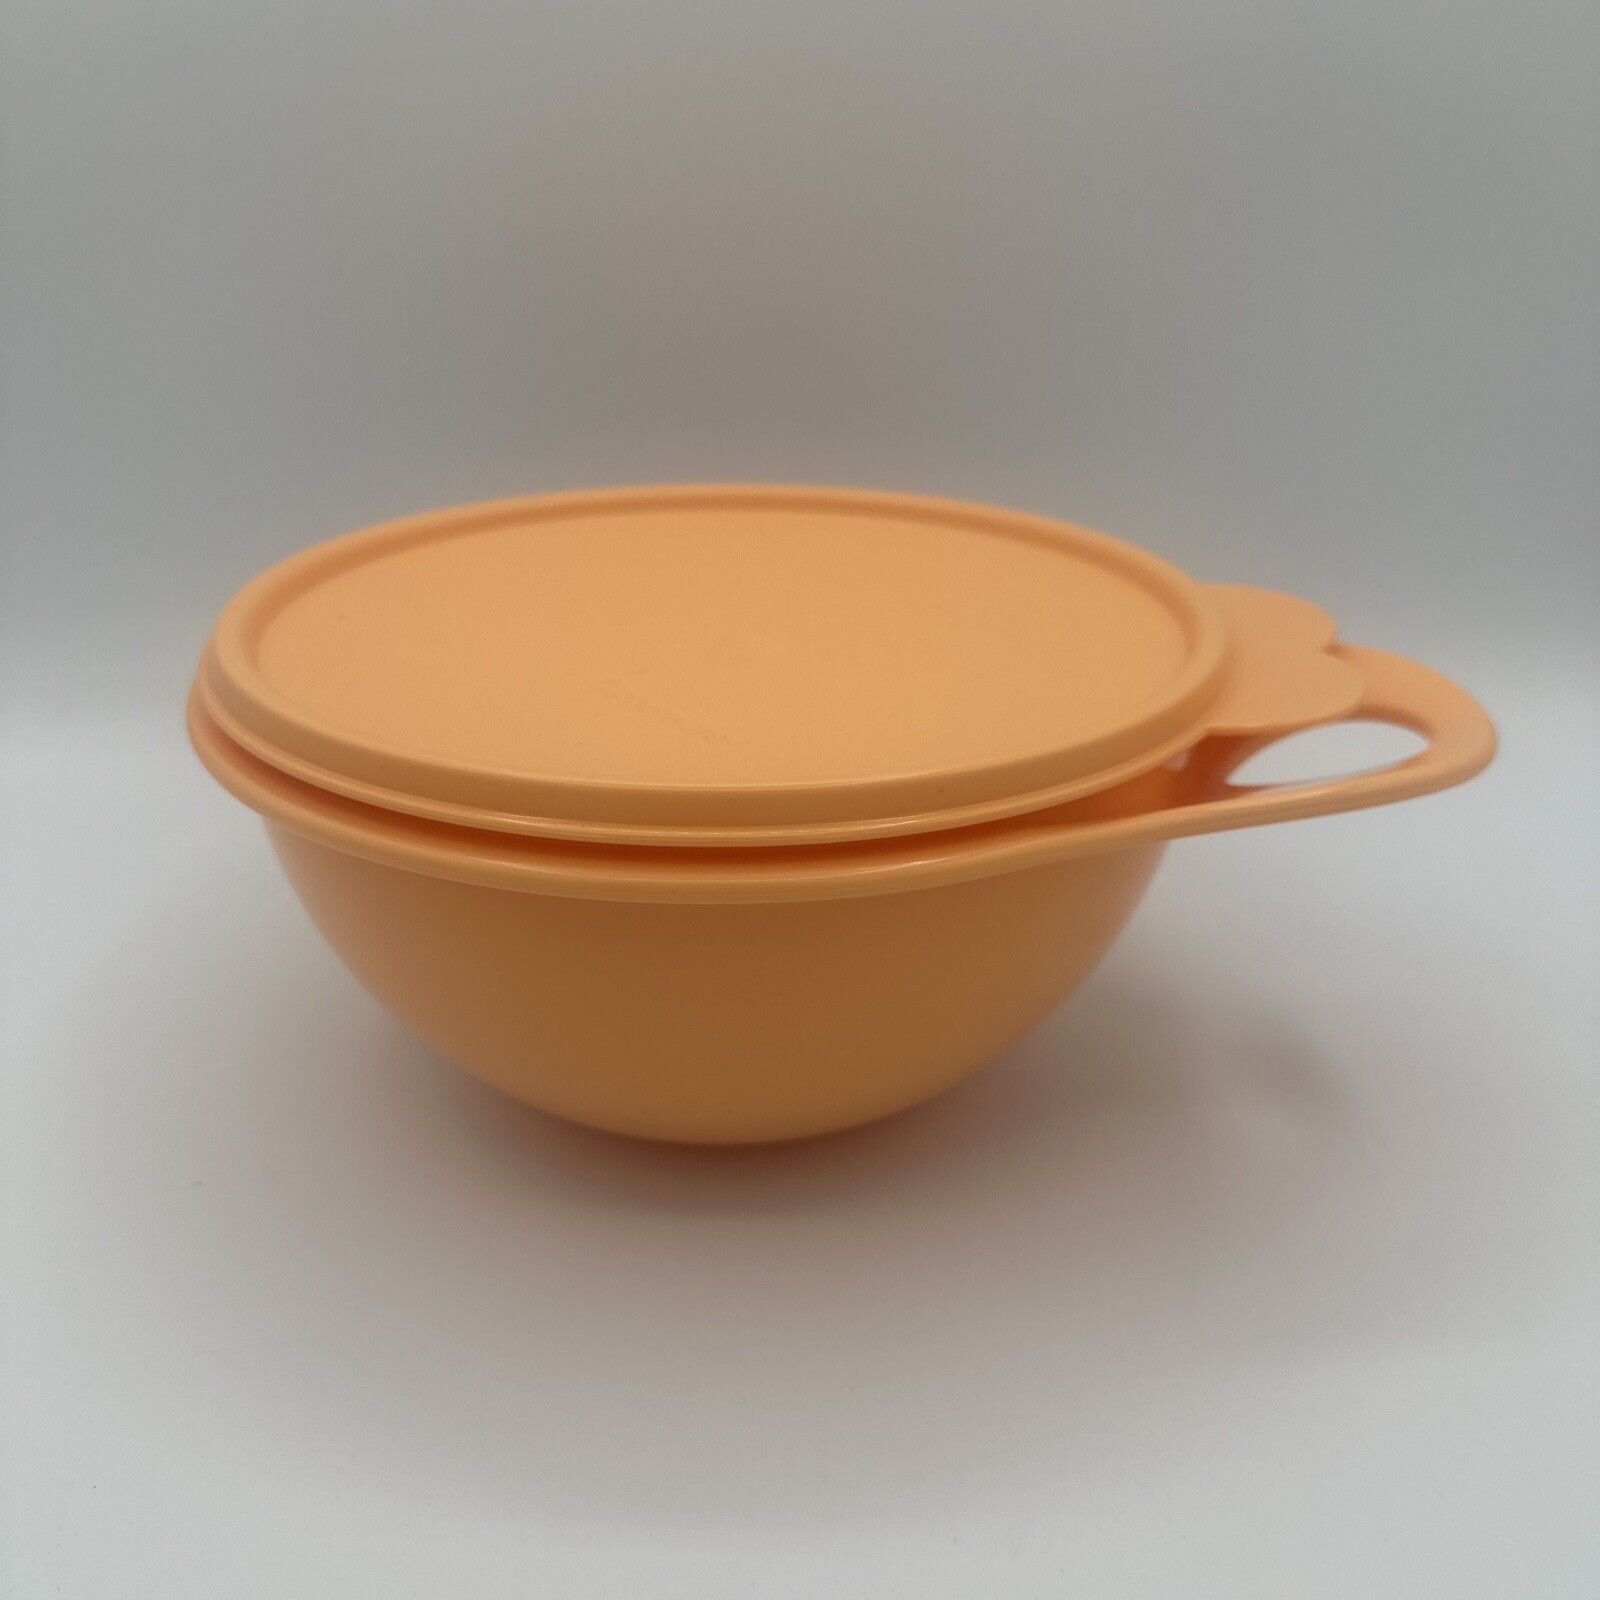 Tupperware Thatsa Bowl Mini 6 Cup Mixing Container Orange Taffy Matching Seal..